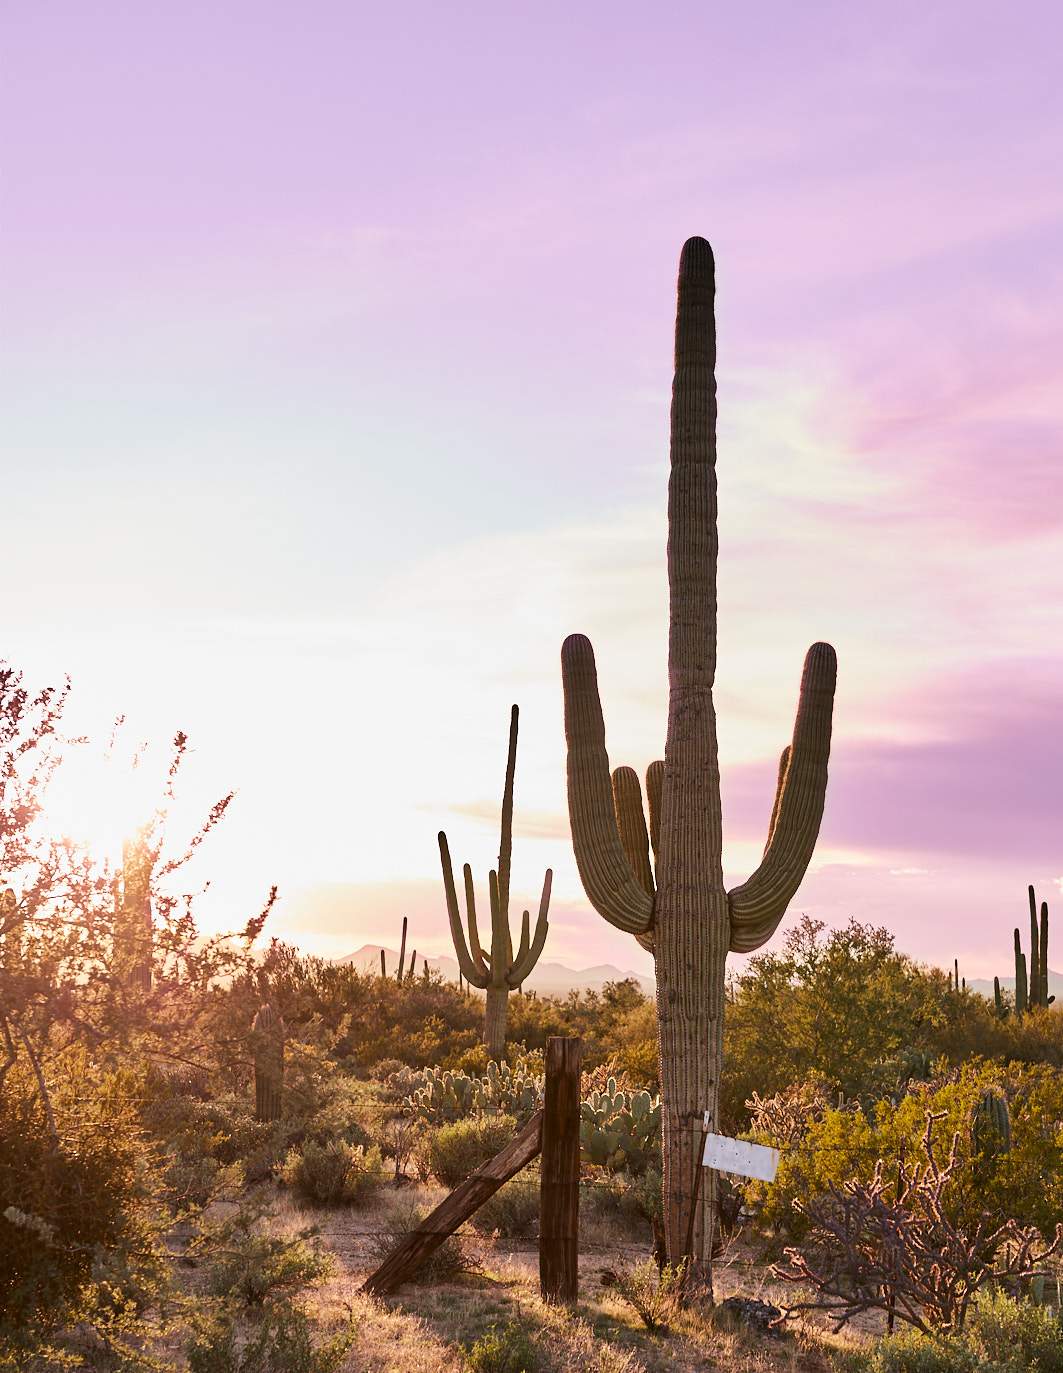 desert background with cactus